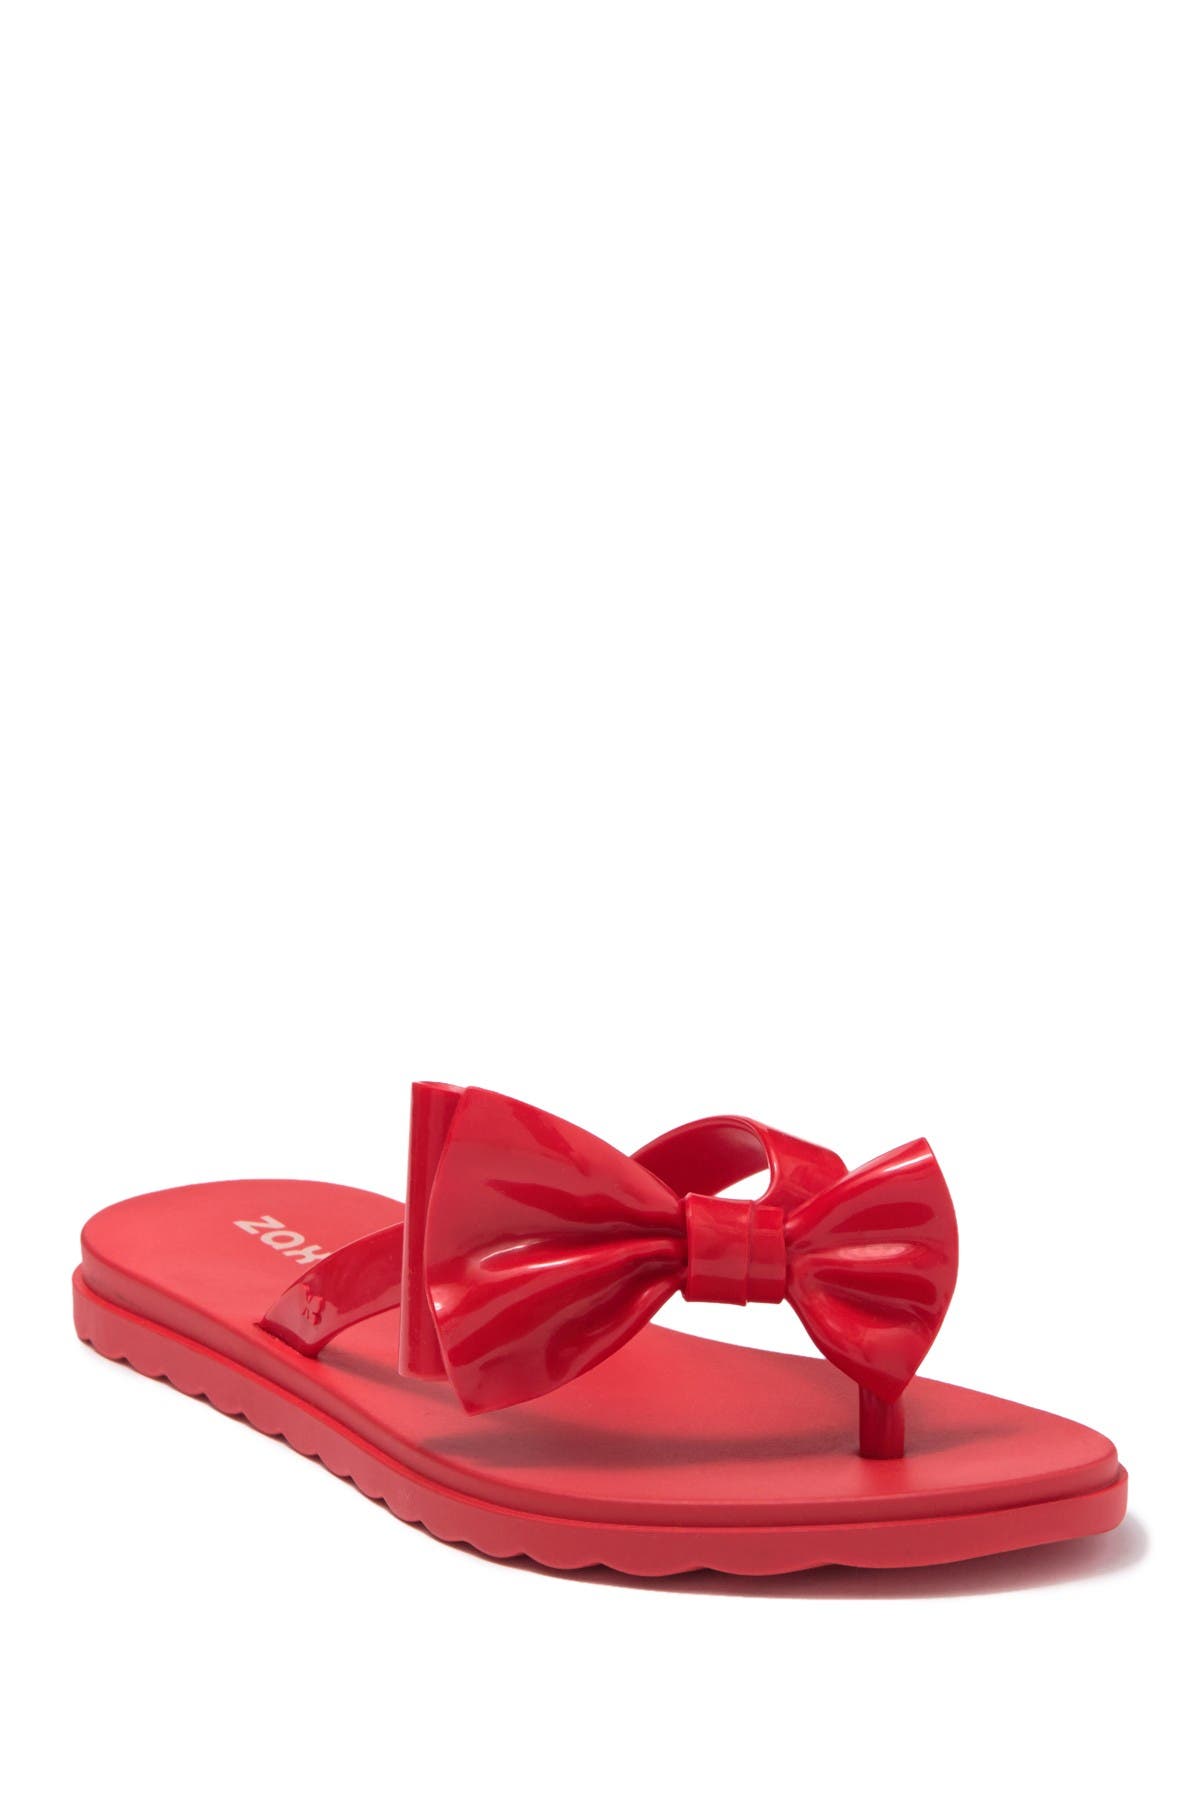 red bow flip flops